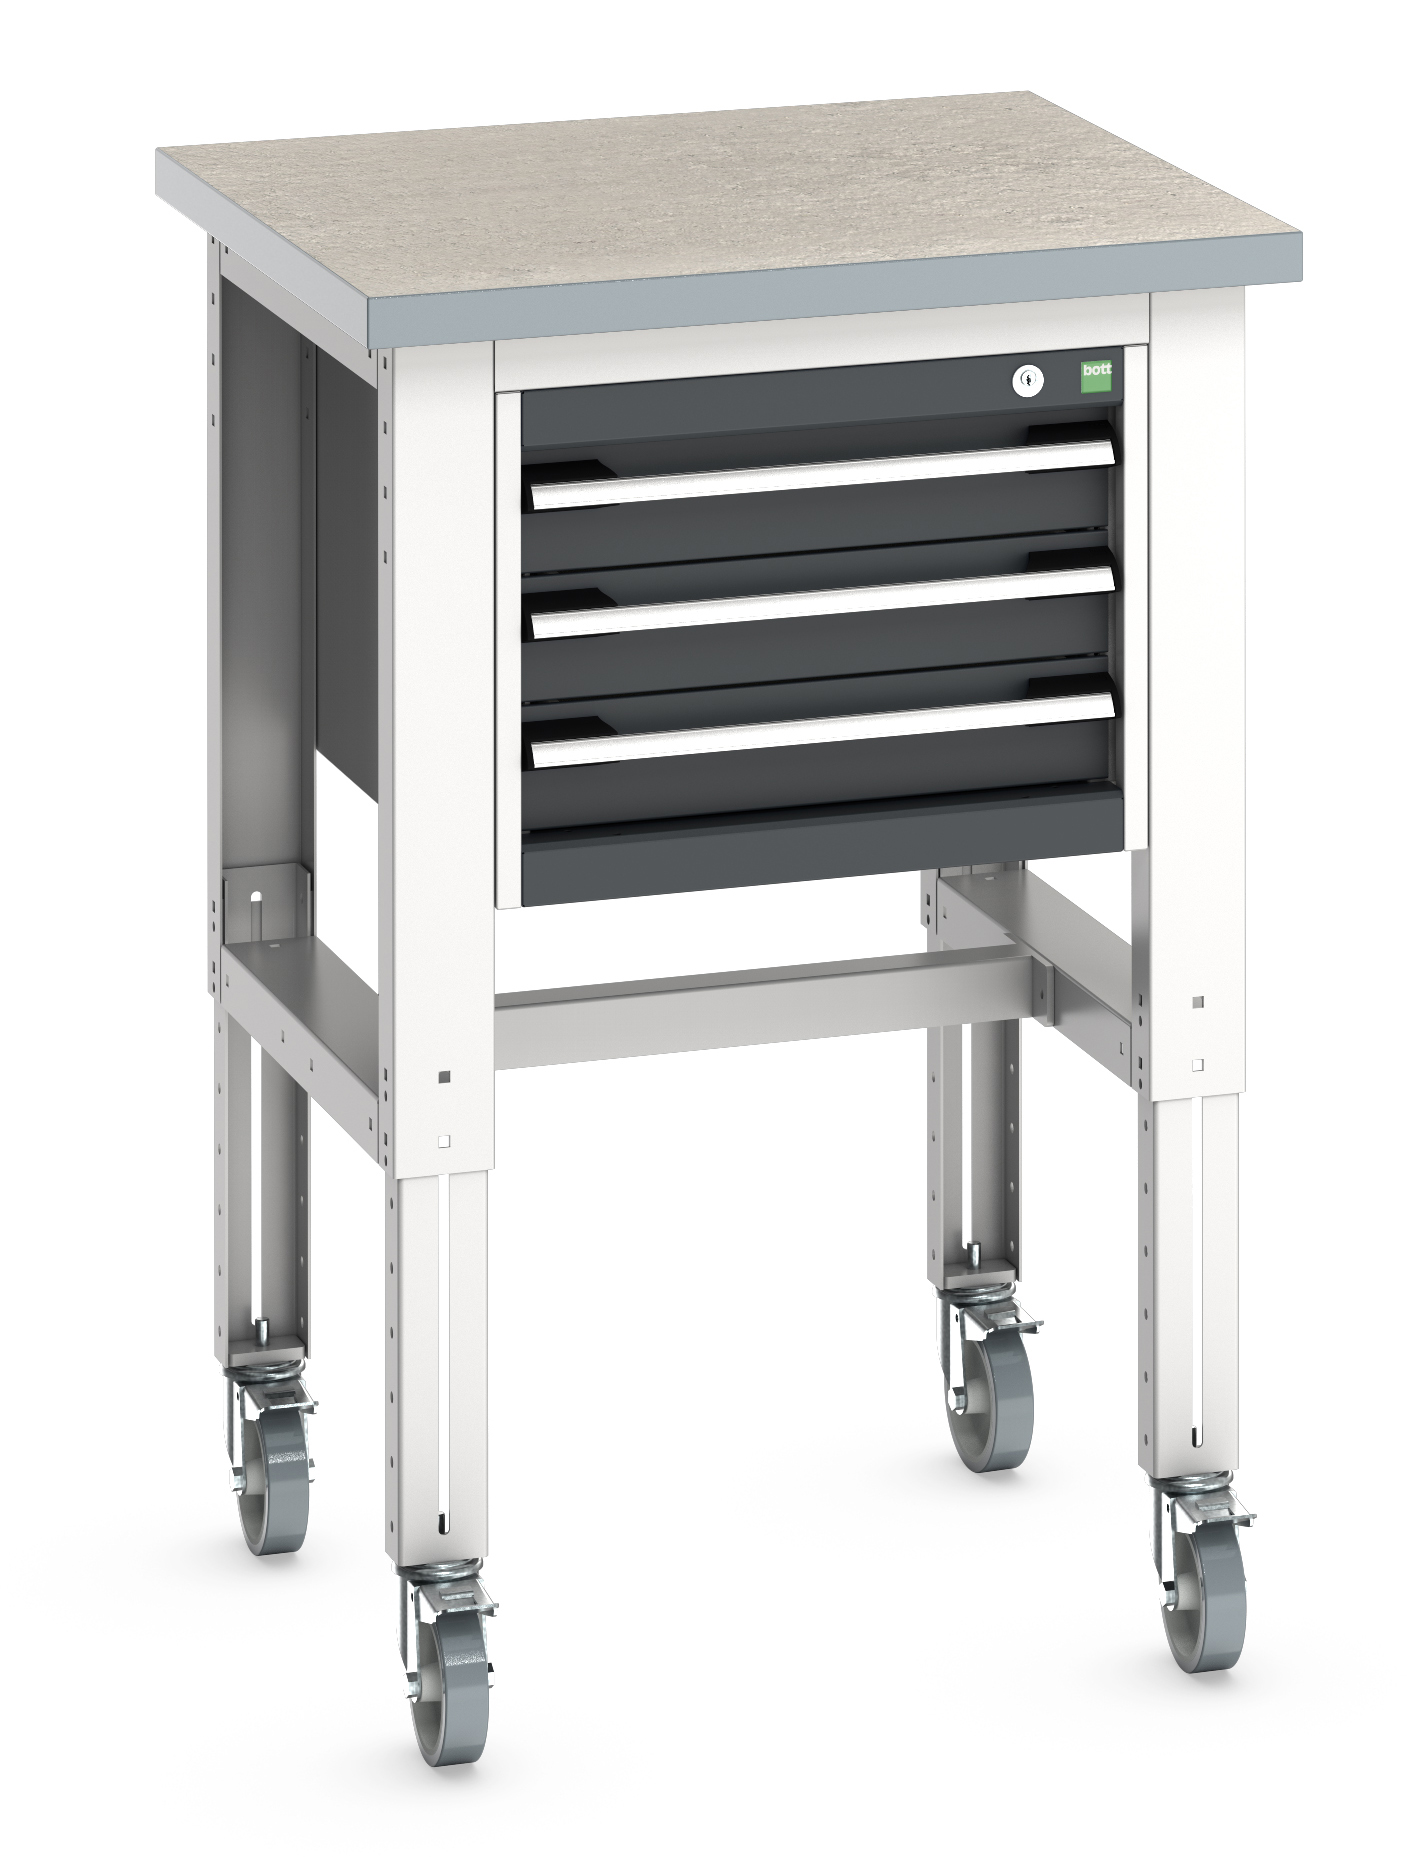 Bott Cubio Adjustable Height Mobile Workstand With 3 Drawer Cabinet - 41003529.19V